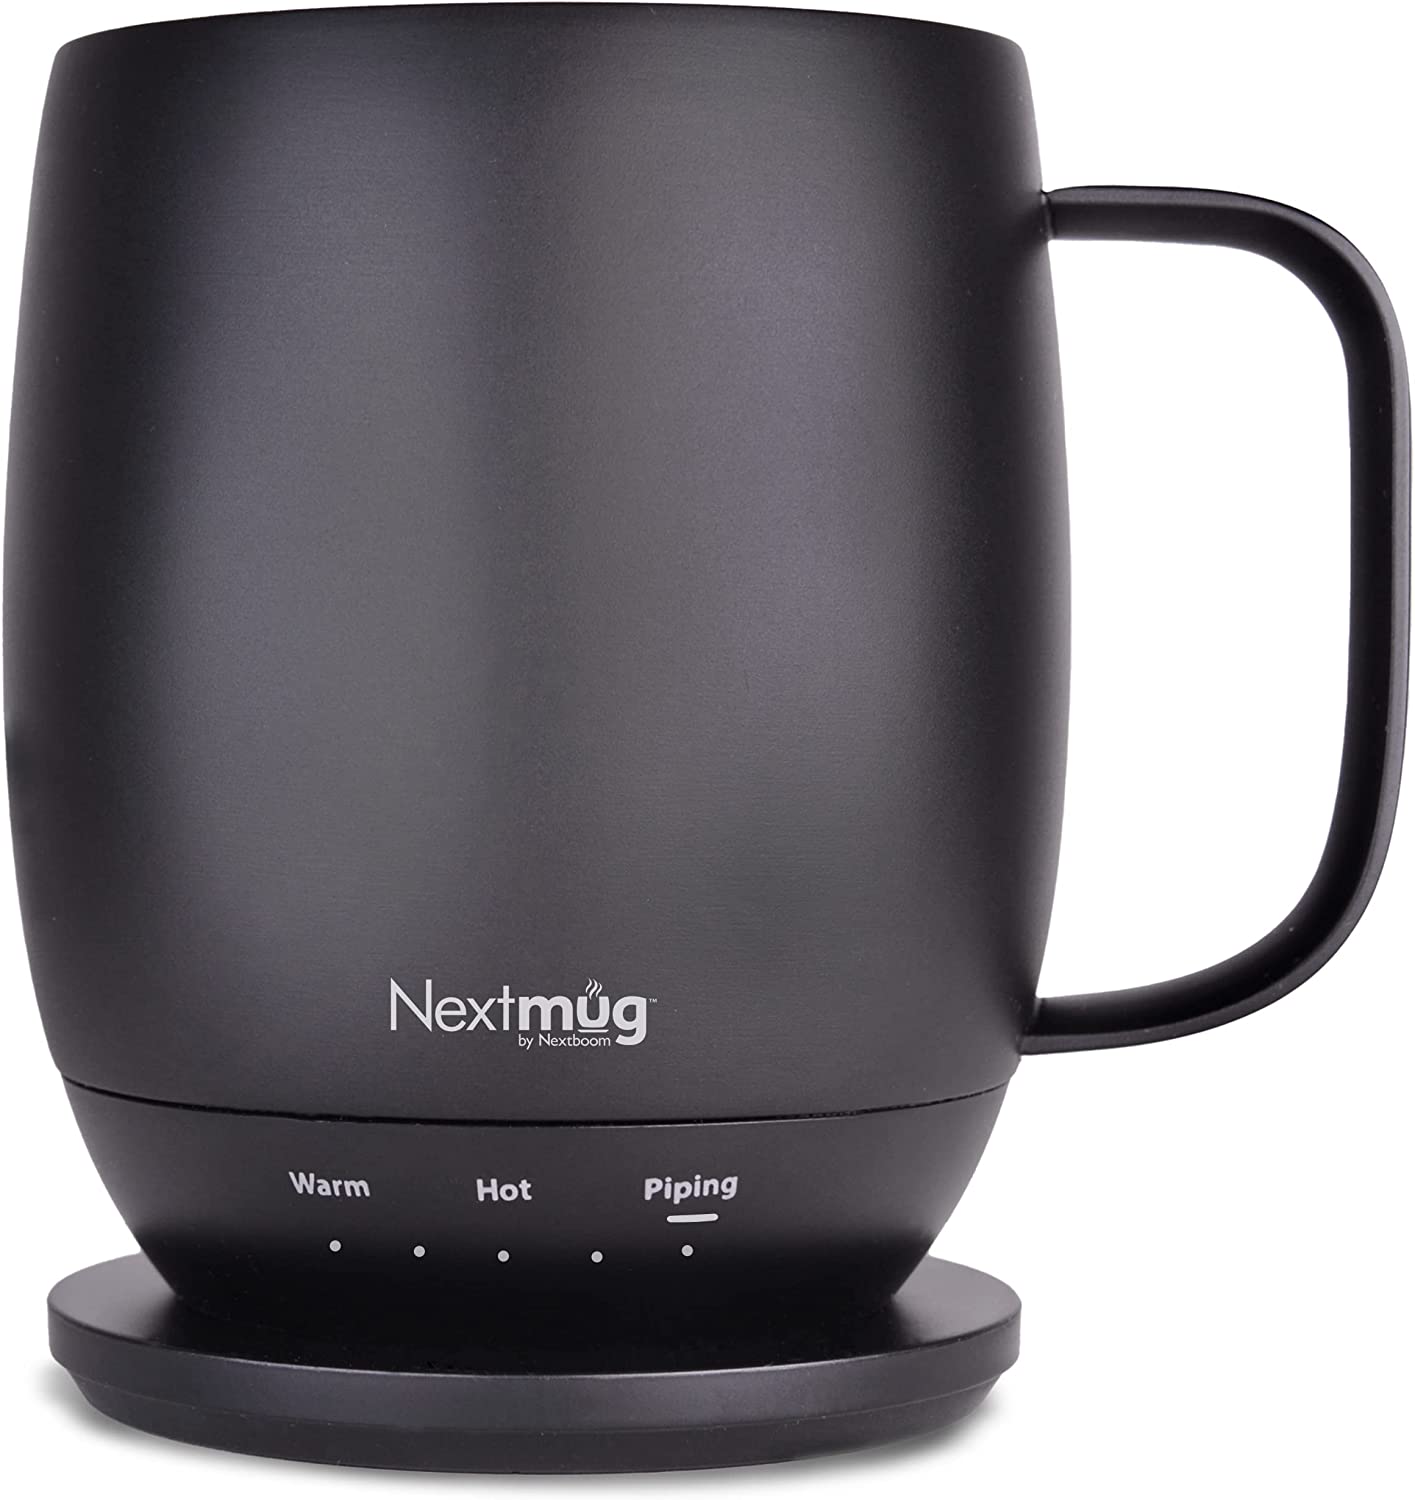 Self-Heating Coffee Mug